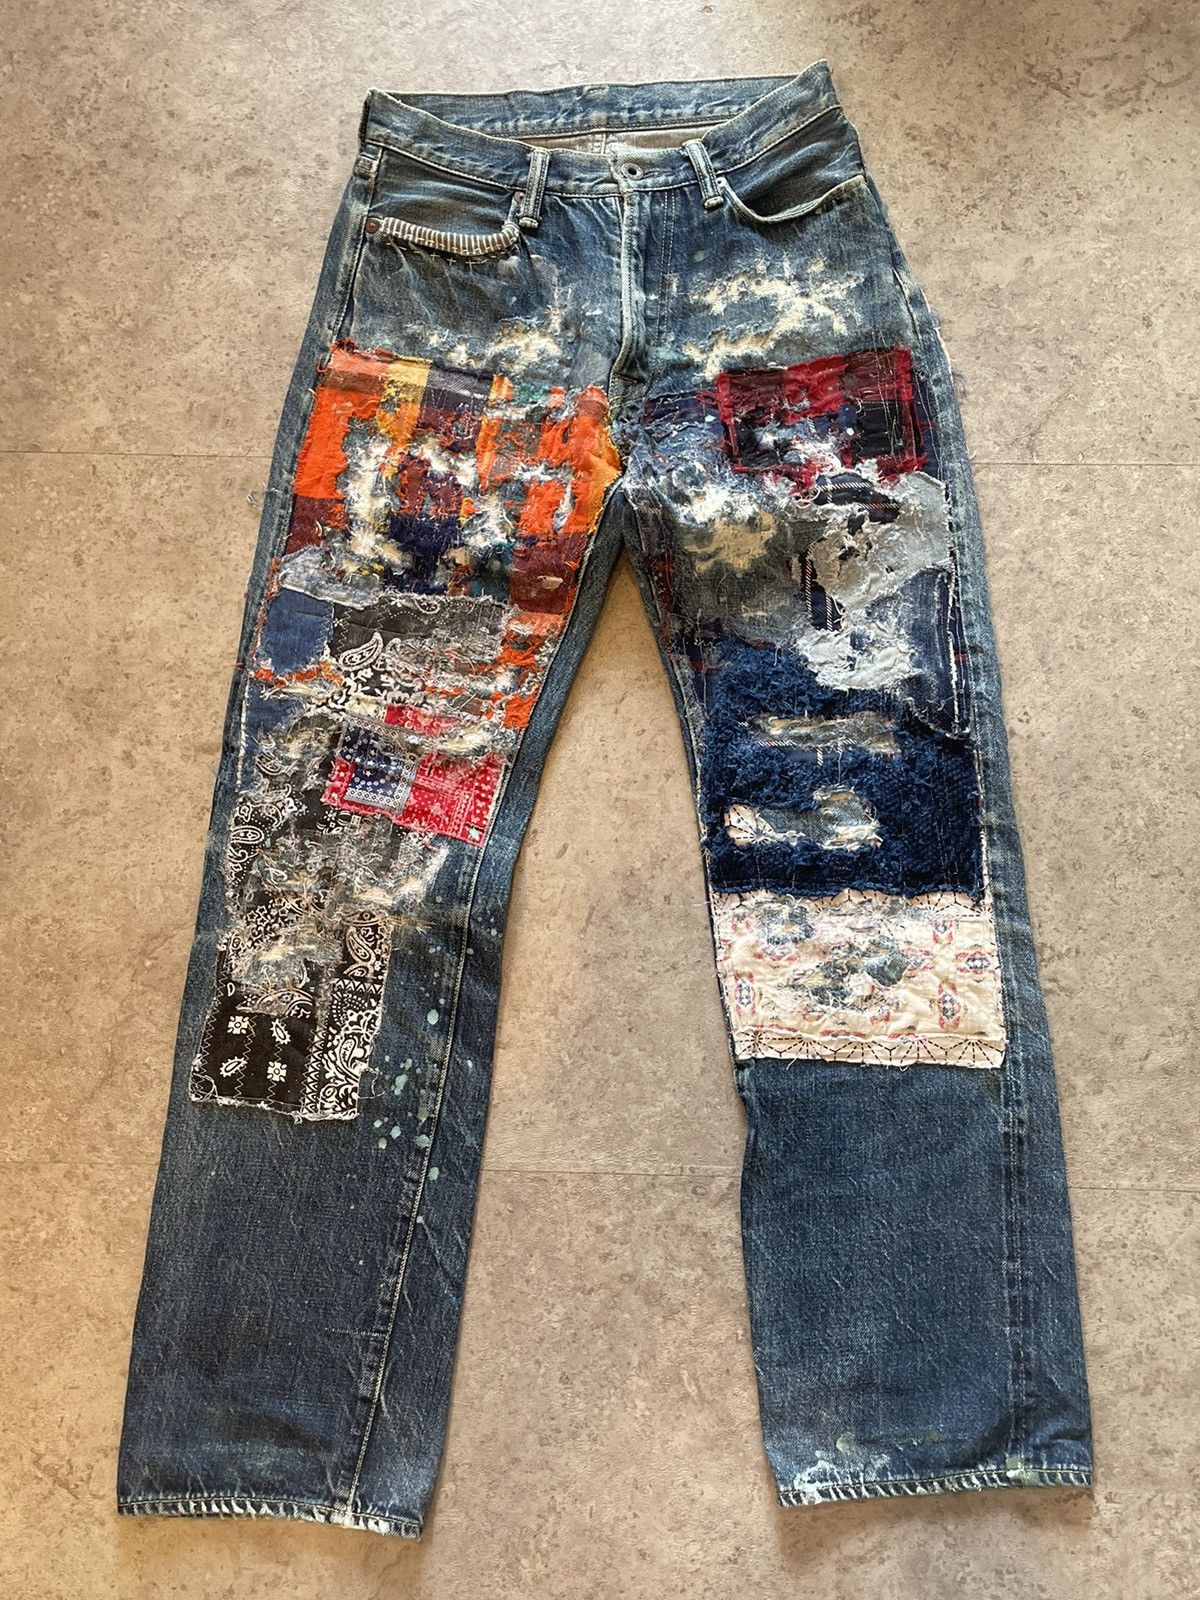 Kapital Kapital Sashiko Boro Patchwork Denim jeans | Grailed